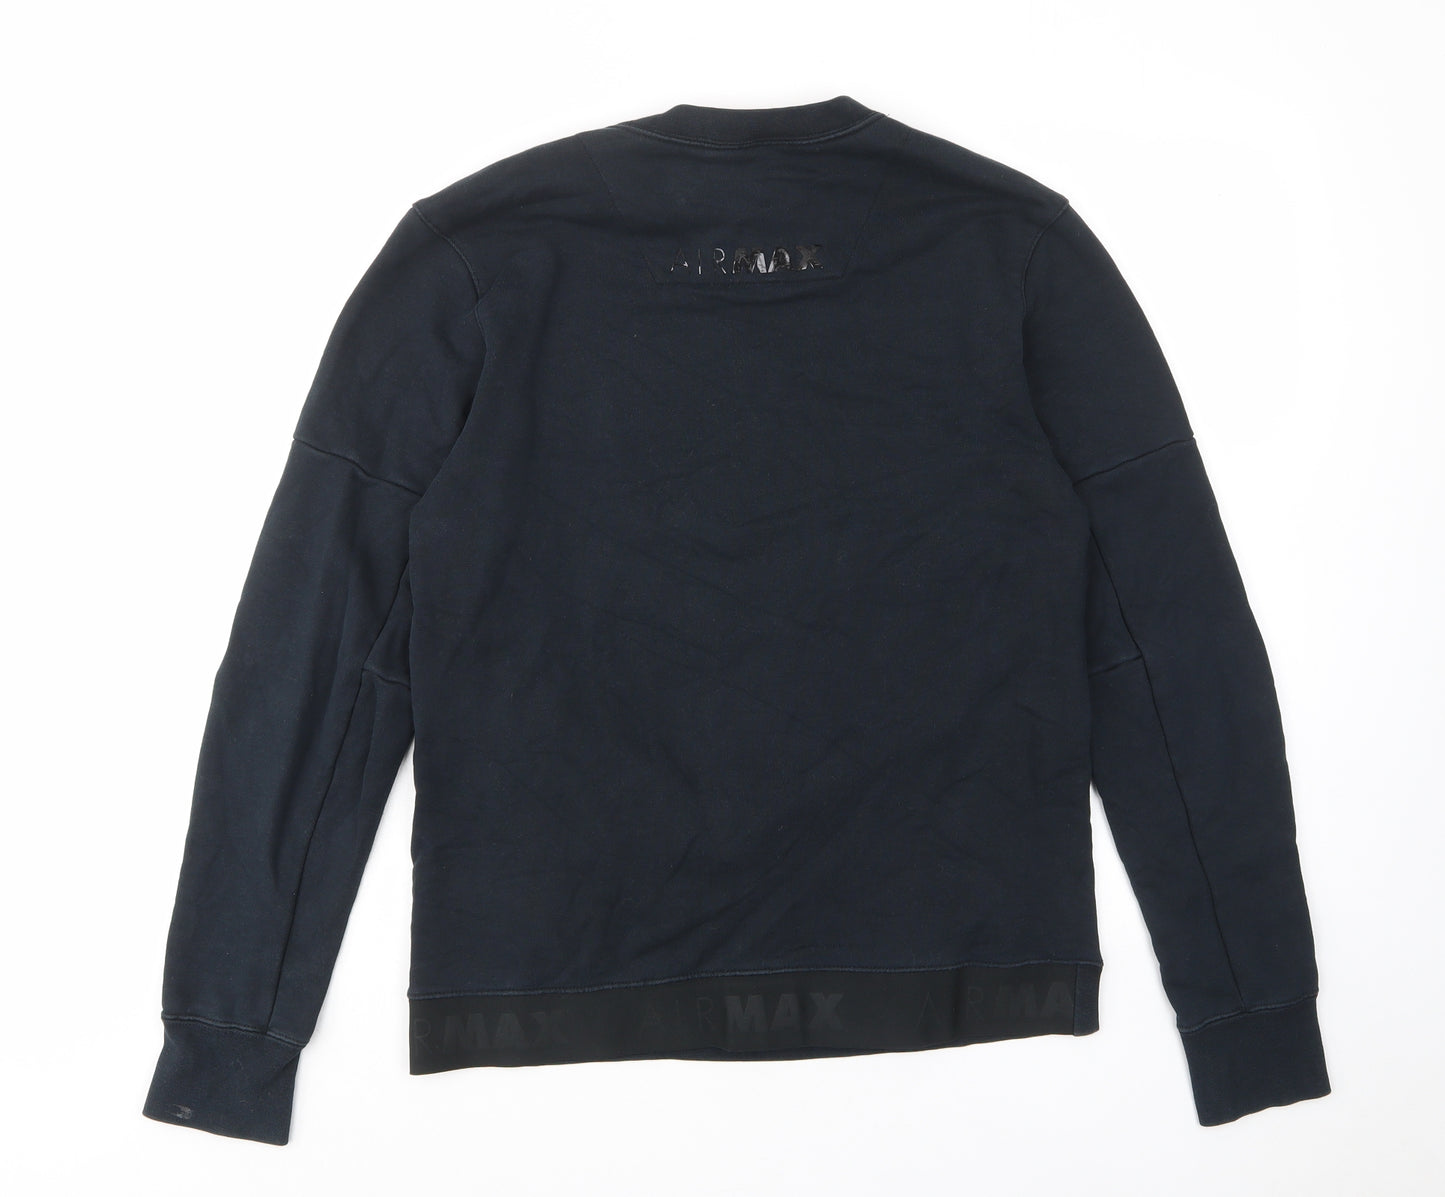 Nike Mens Black Cotton Pullover Sweatshirt Size M - Logo, Embroided, Zip Pockets